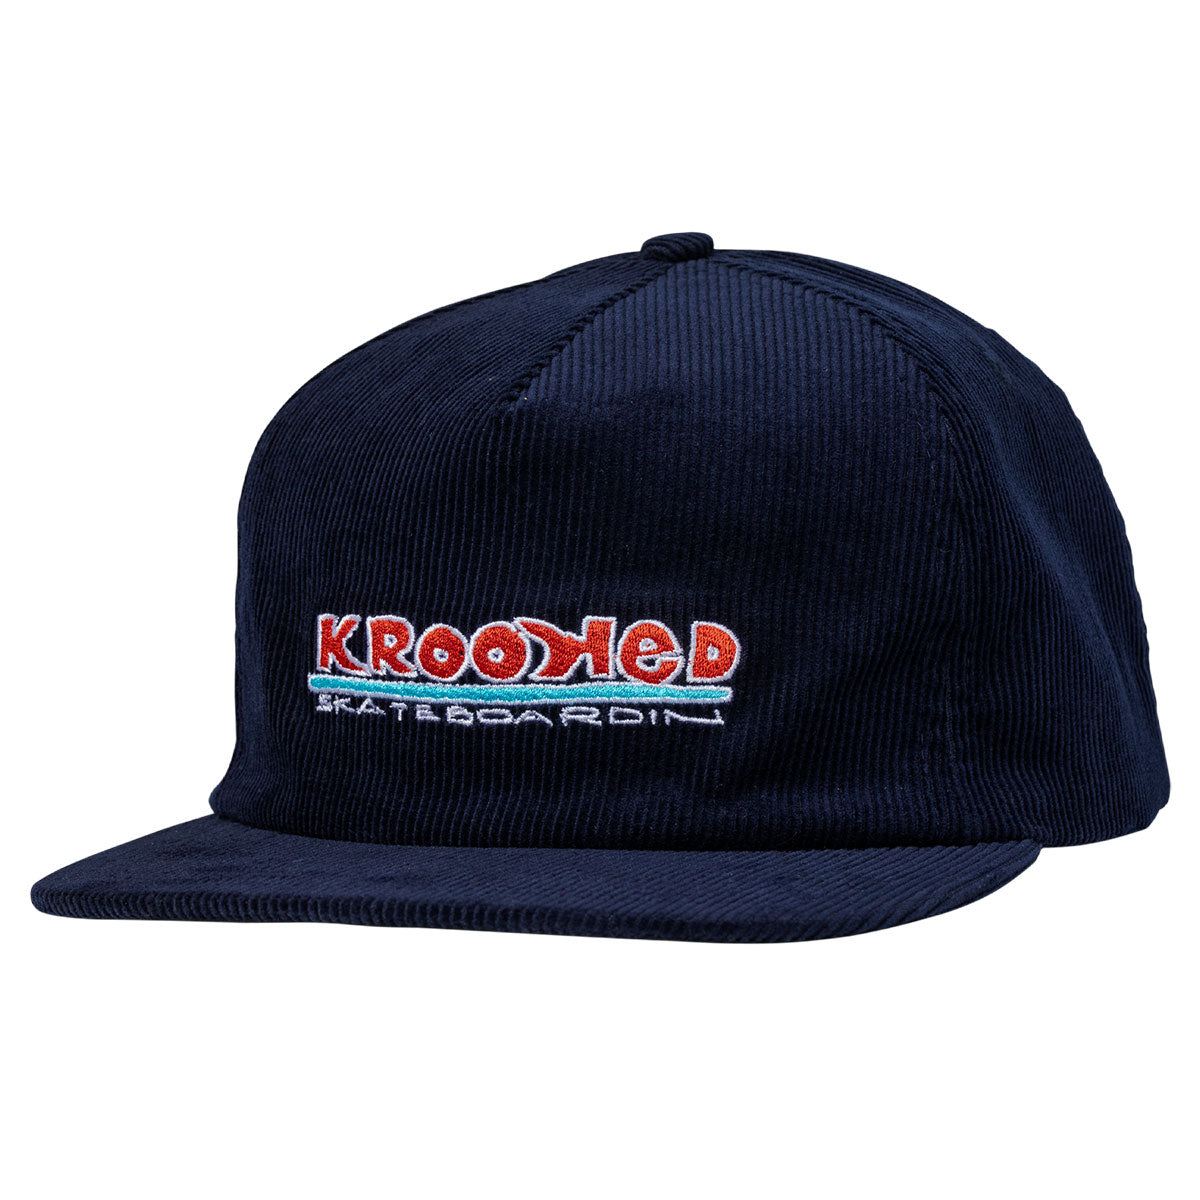 Krooked Skateboardin Hat - Navy image 1